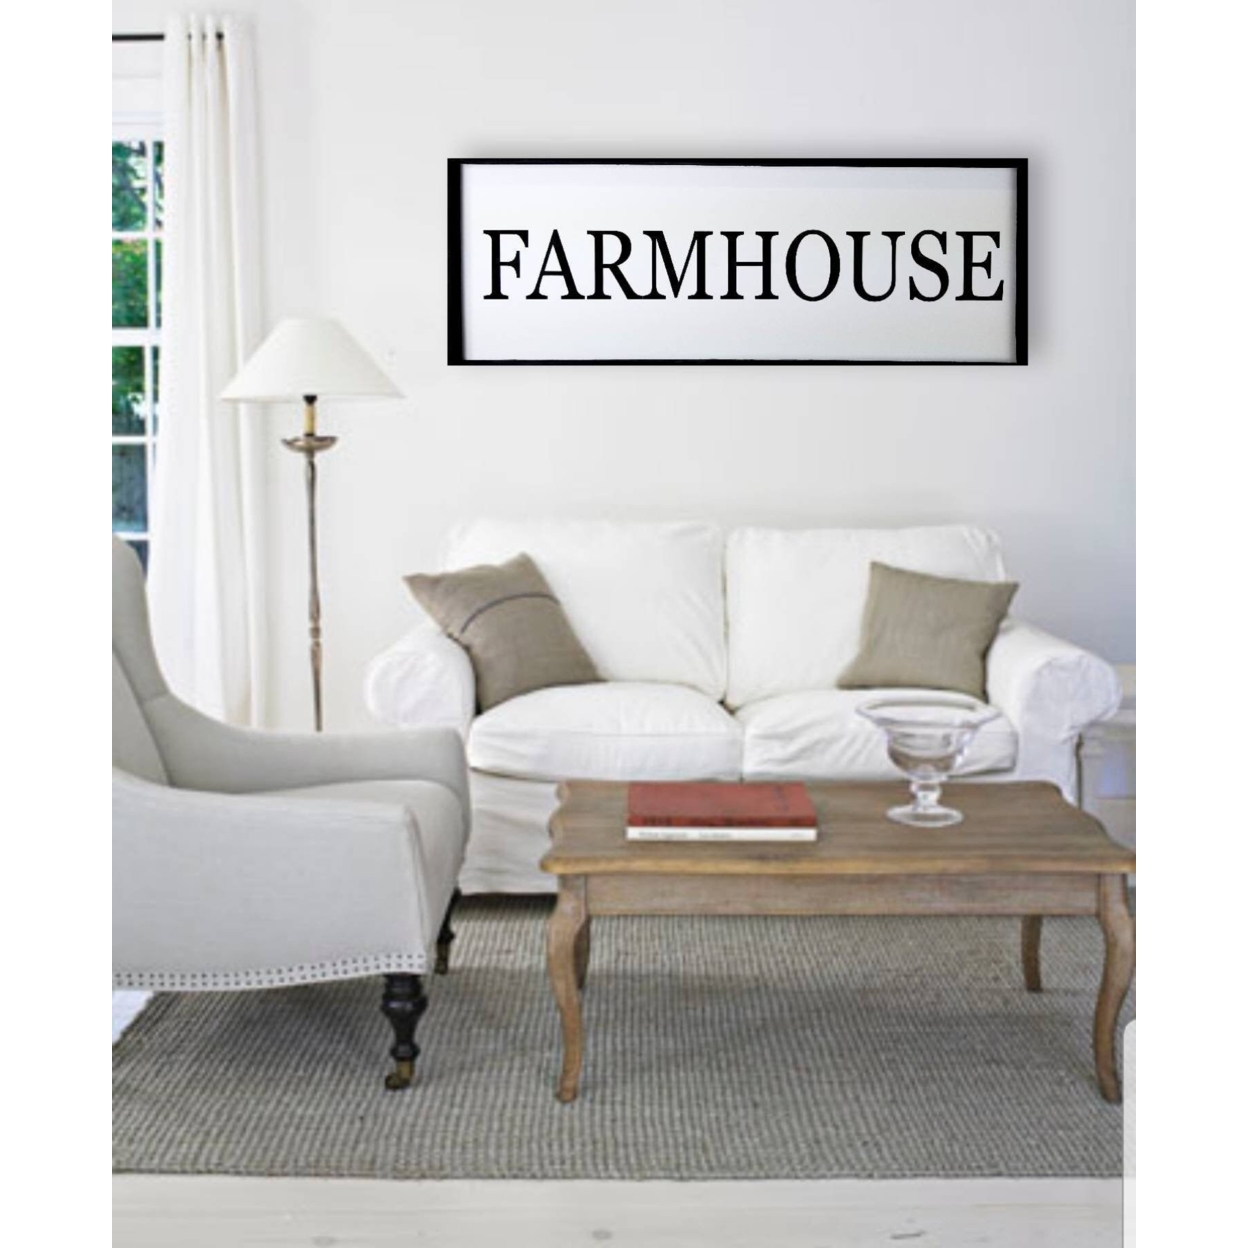 Farmhouse Sign - Canvas Wall Sign - Farmhouse Decor - Funny Sign - Rustic Decor - Canvas Wall Art - Framed Sign - Home Sign - Natural Cedar